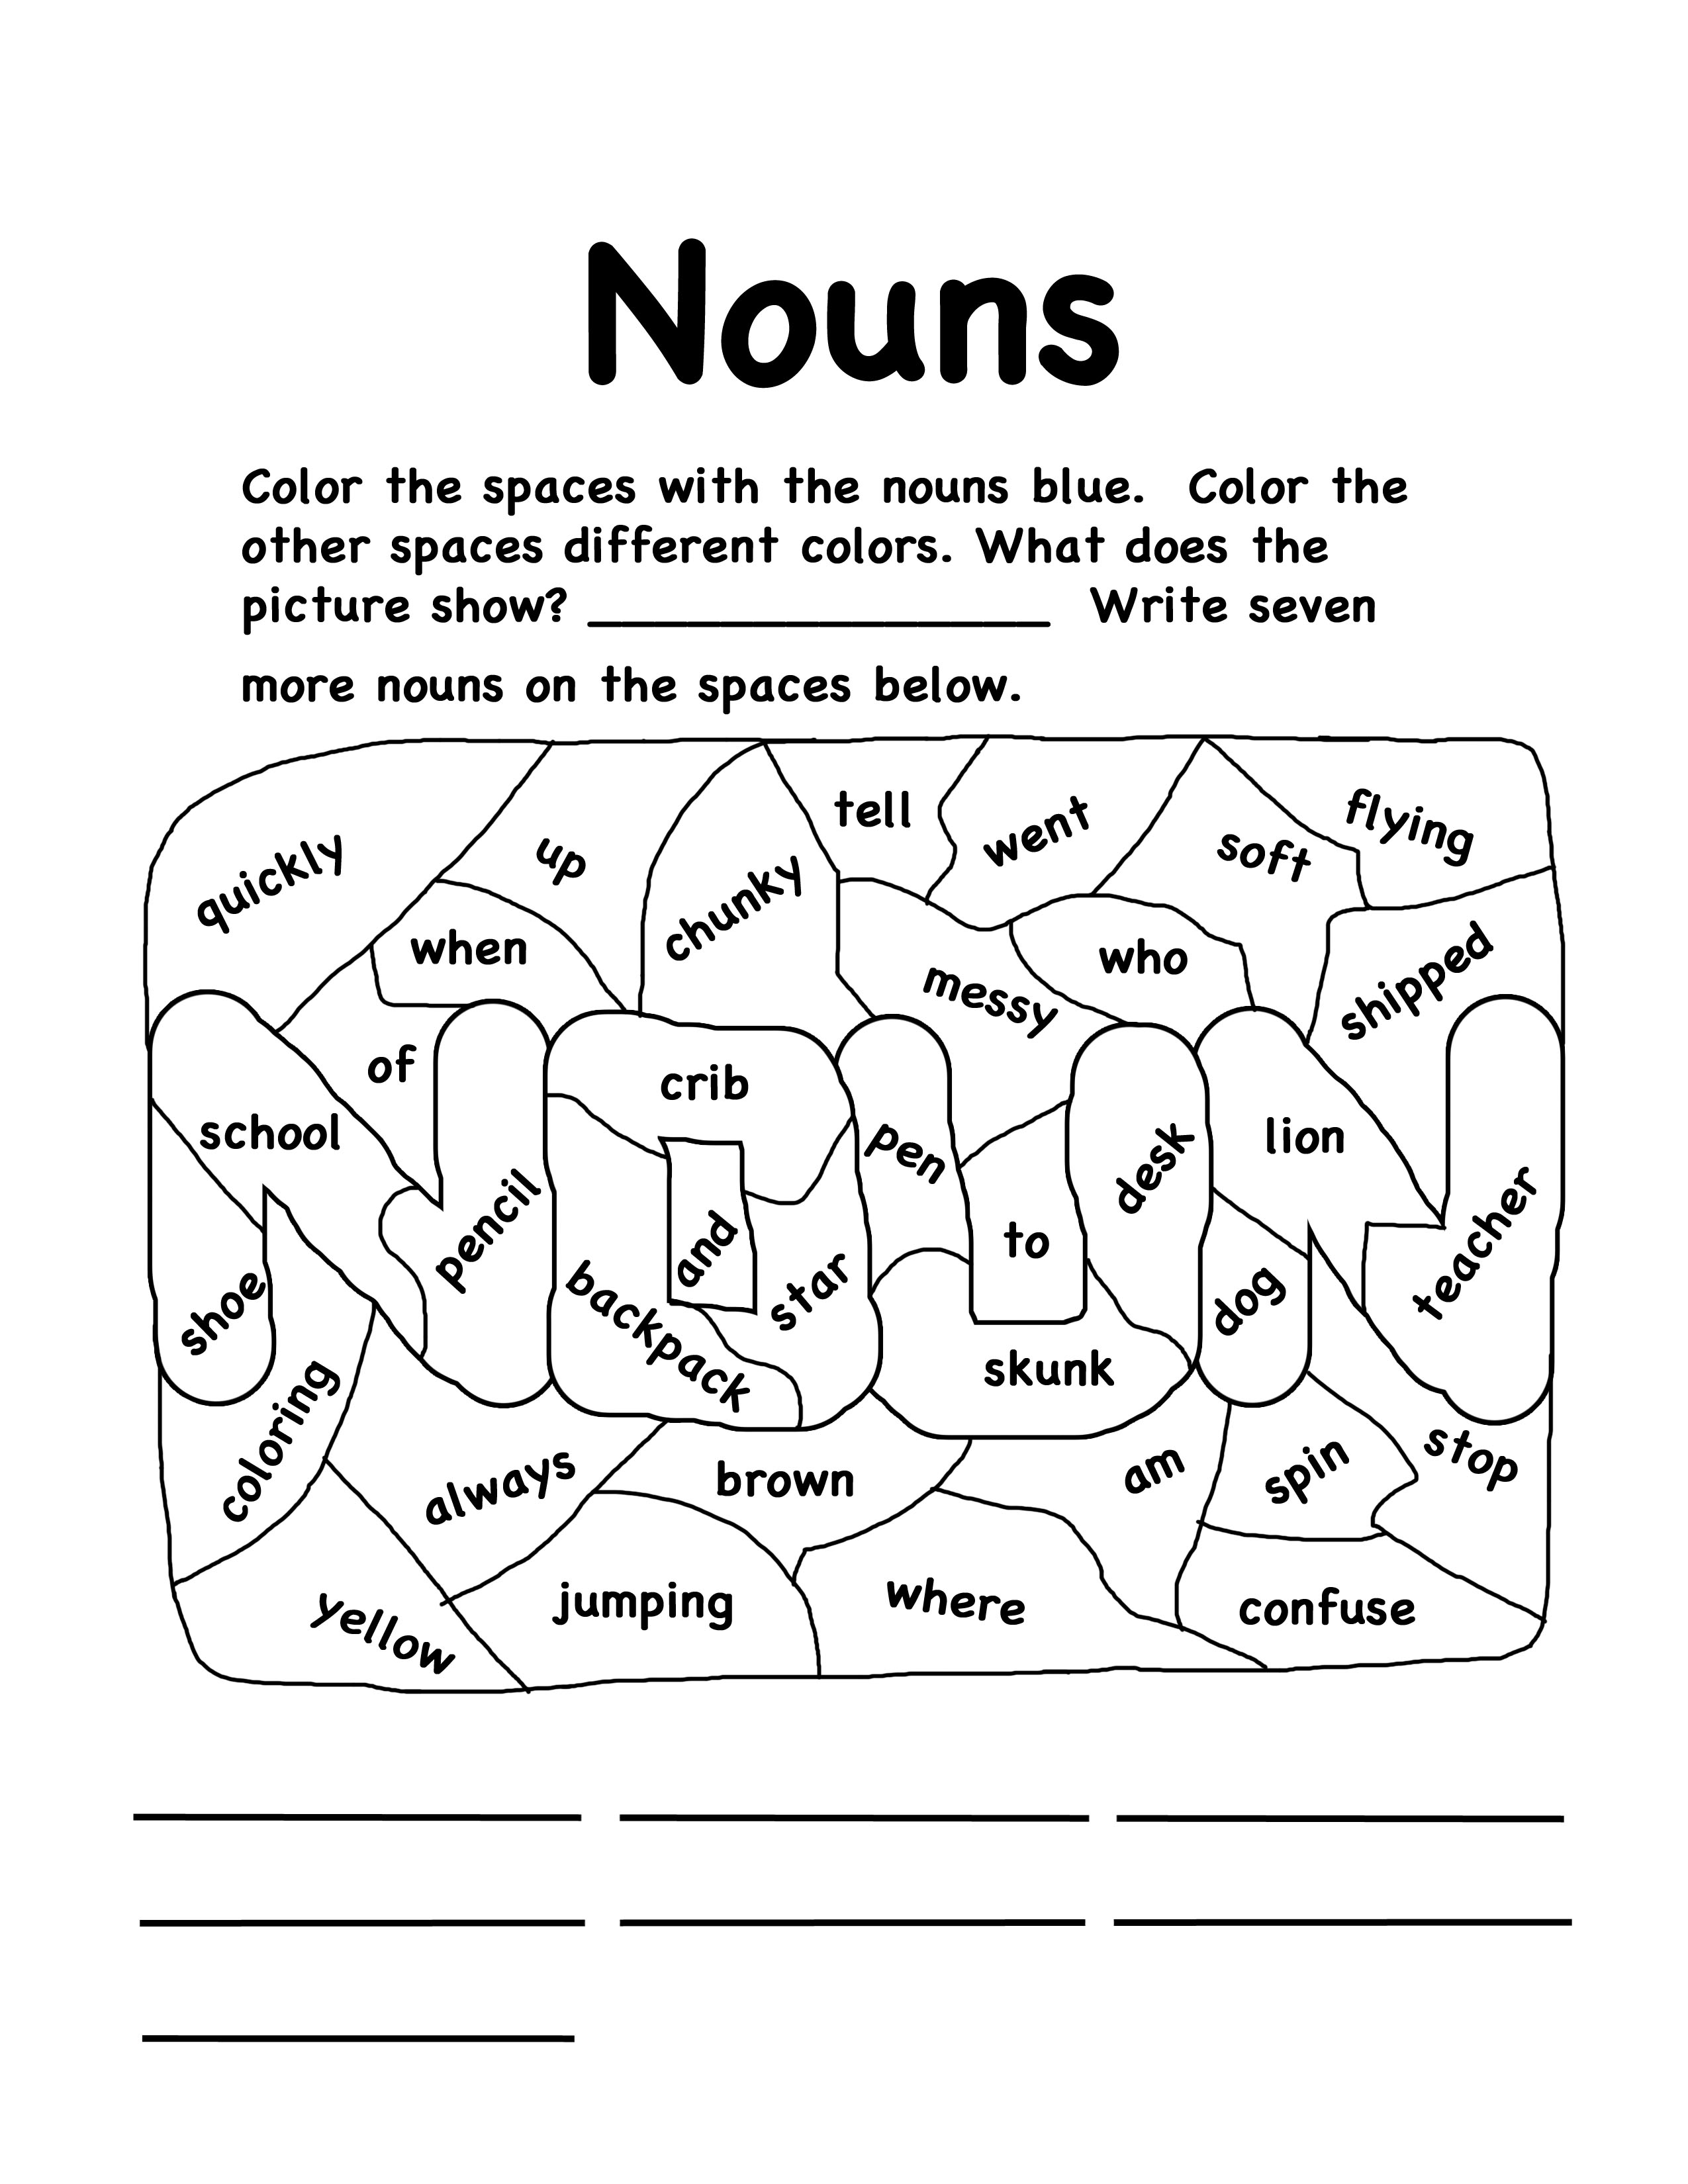 color-the-nouns-worksheet